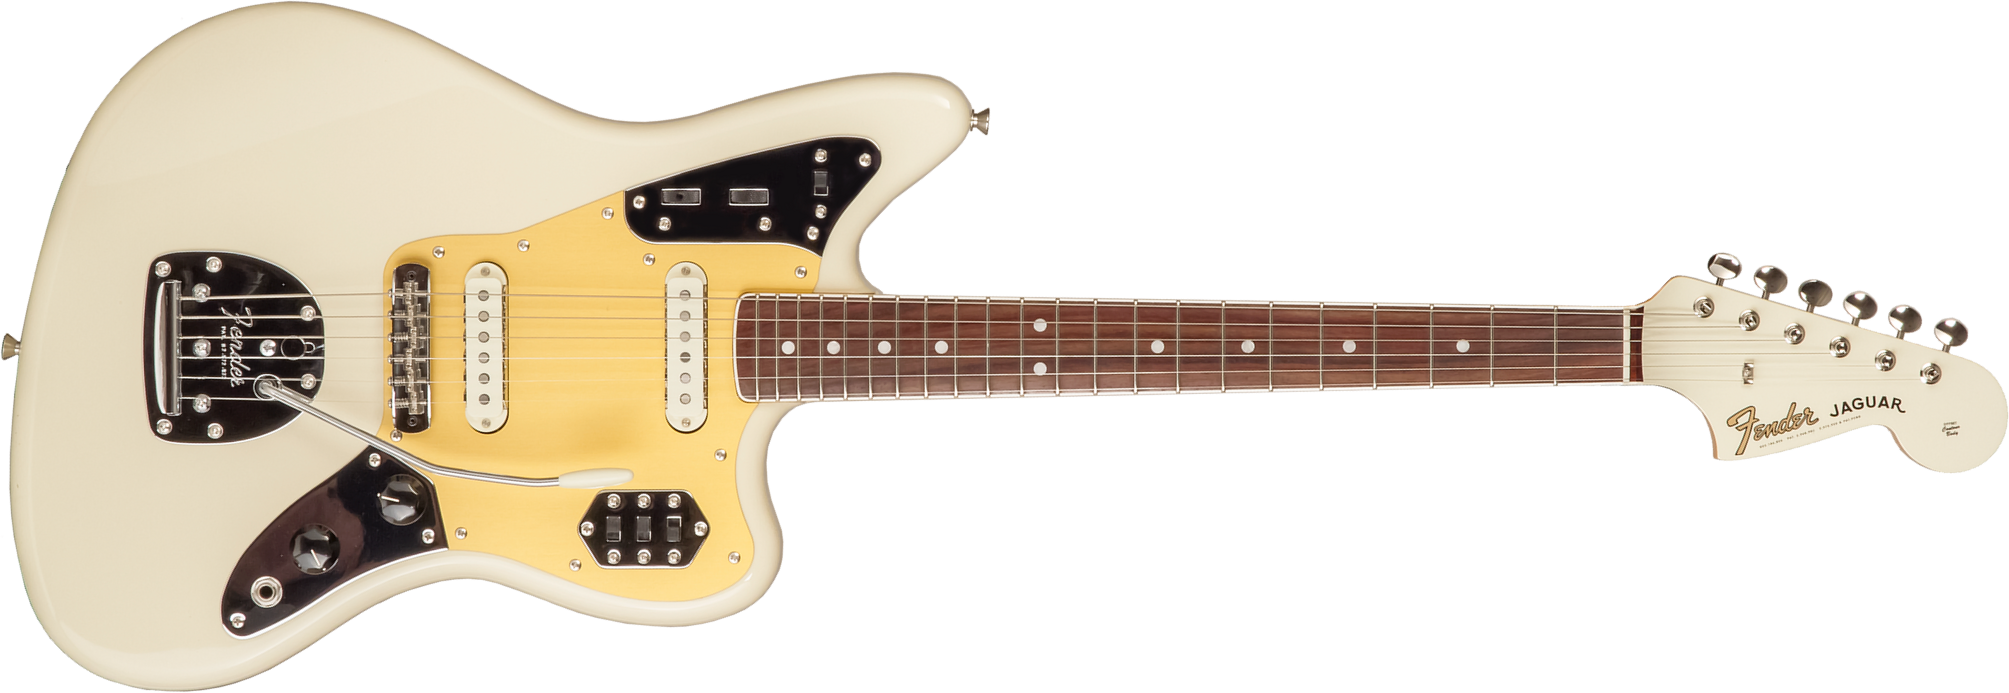 Fender Jaguar Traditional Ii 60s Japan 2s Trem Rw - Olympic White - Retro-rock elektrische gitaar - Main picture